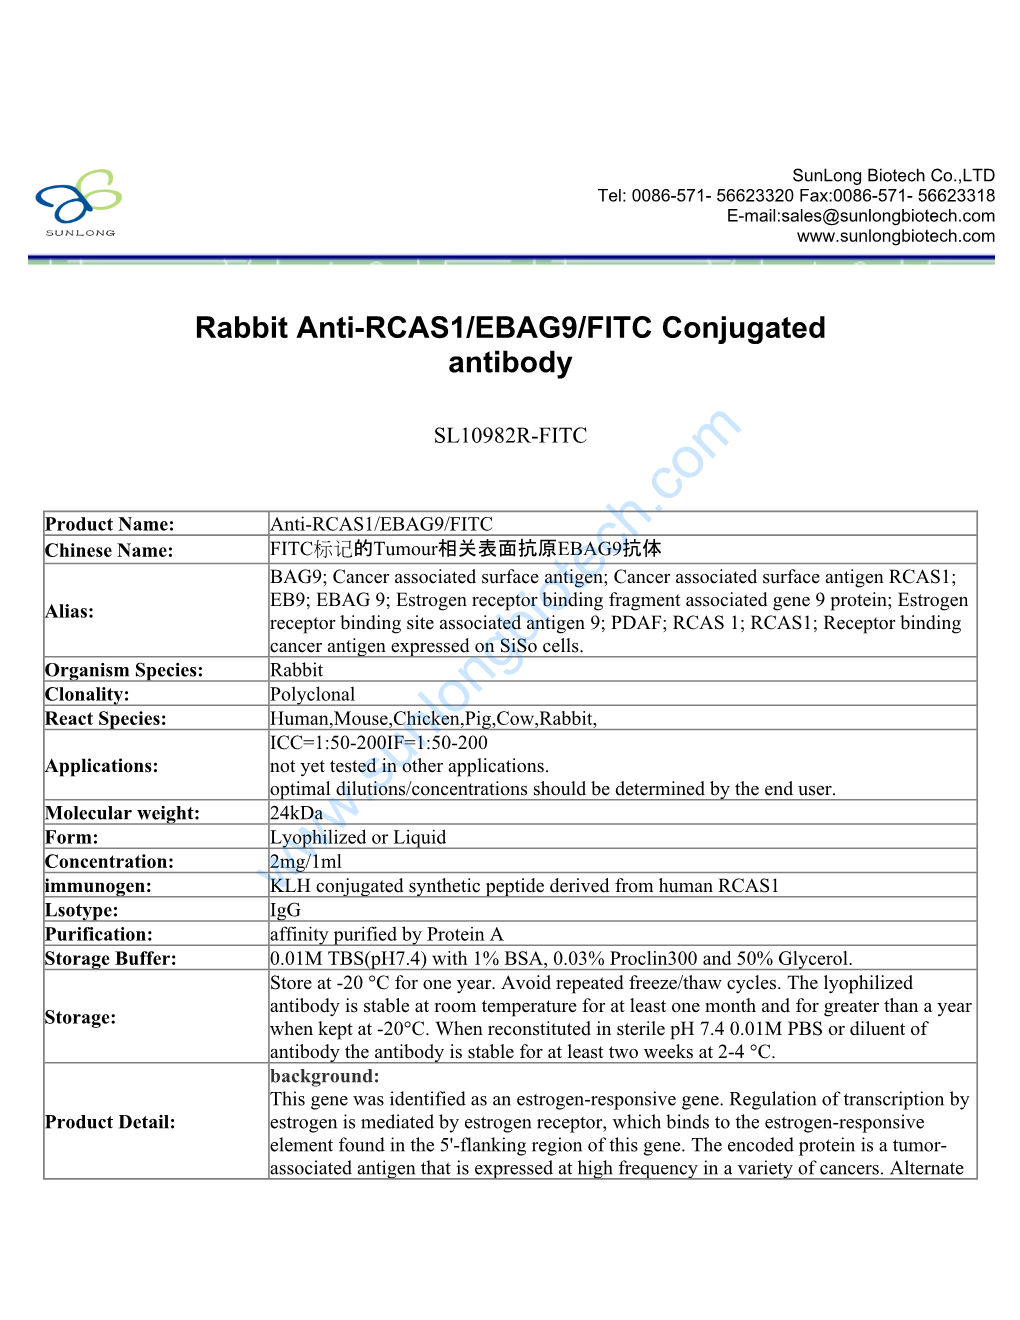 Rabbit Anti-RCAS1/EBAG9/FITC Conjugated Antibody